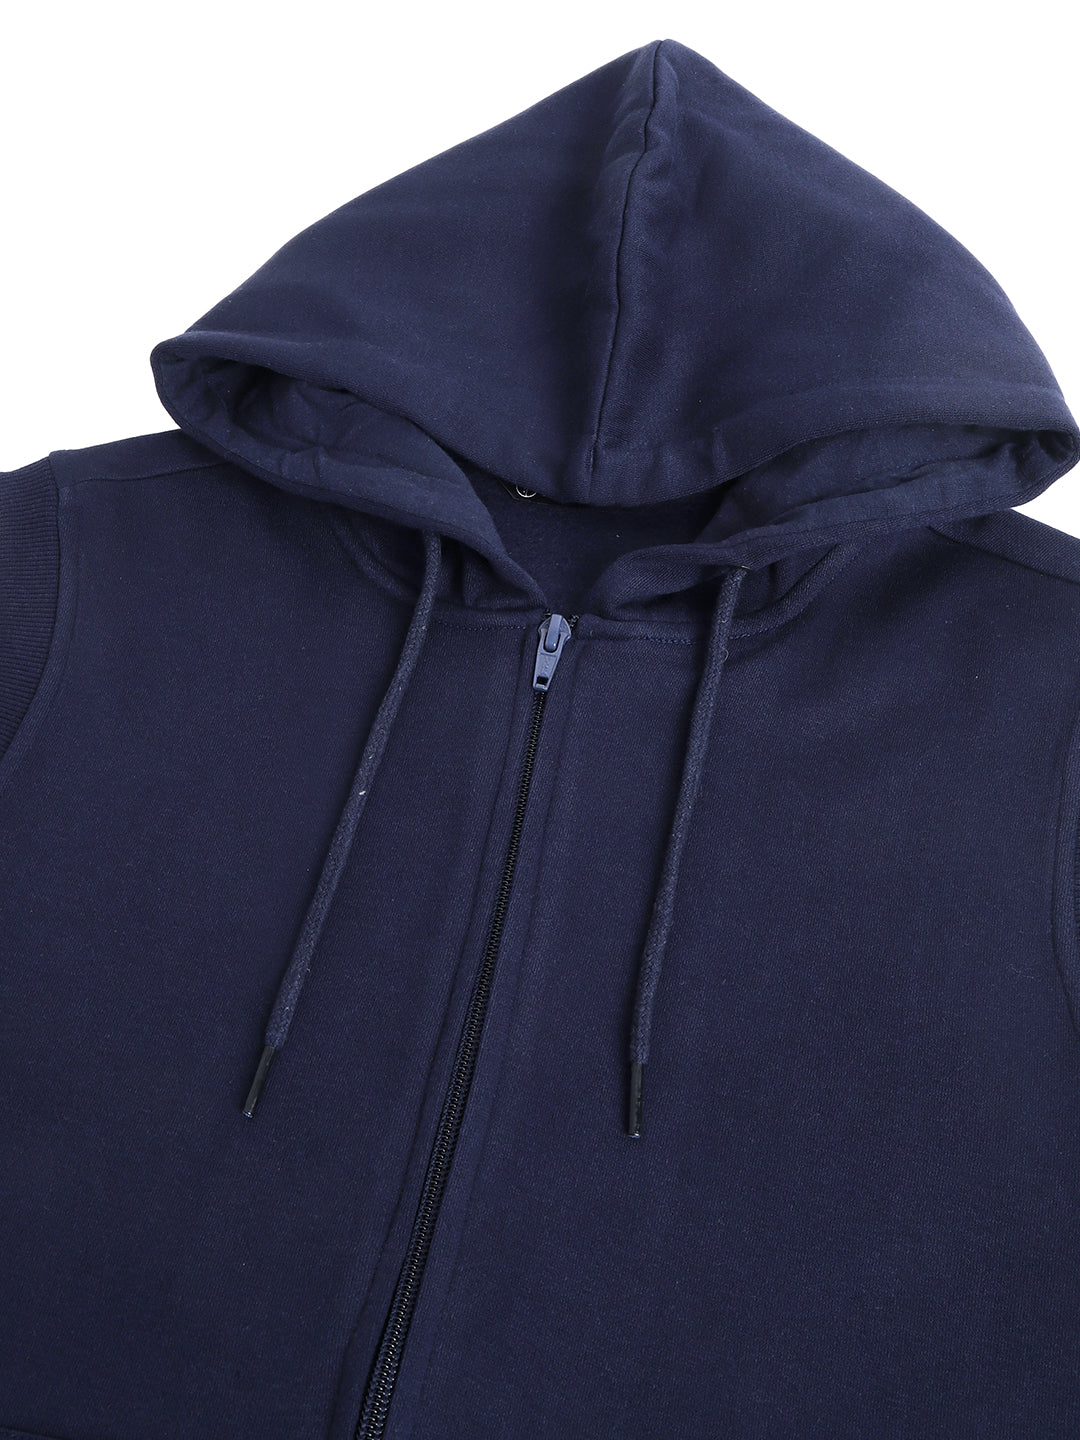 Women Navy Blue Solid Sleeveless Front Open Full Zipper Hooded Sweatshirt